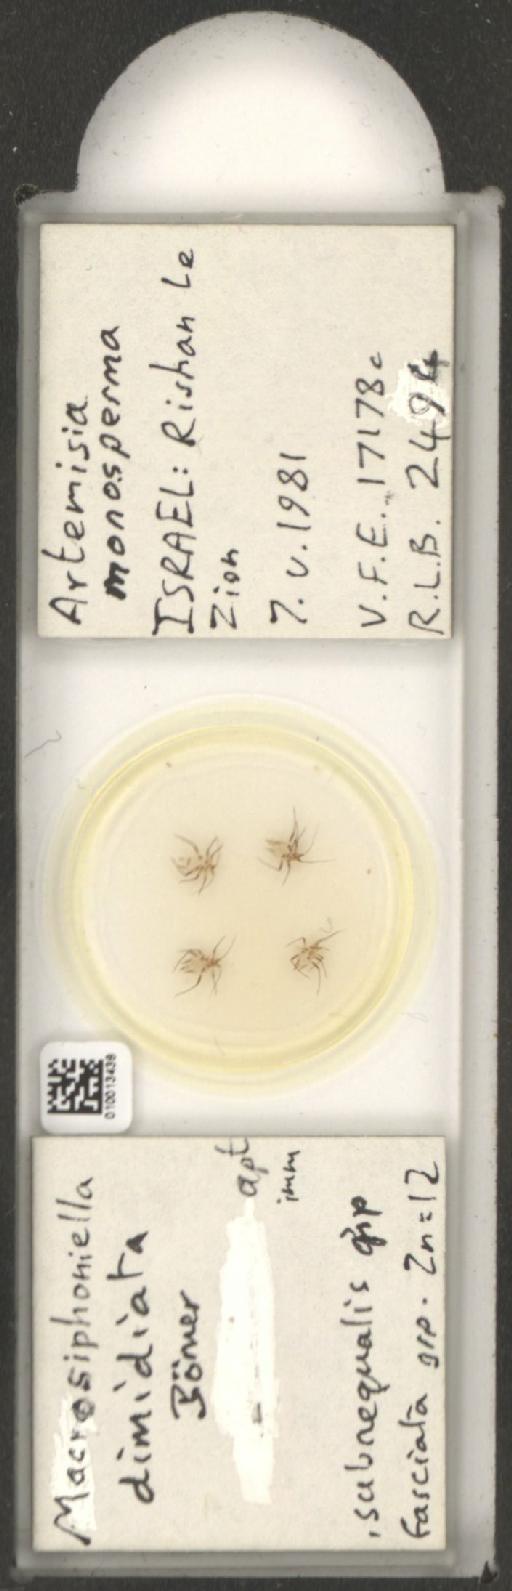 Macrosiphoniella dimidiata Börner, 1942 - 010013438_112659_1094720